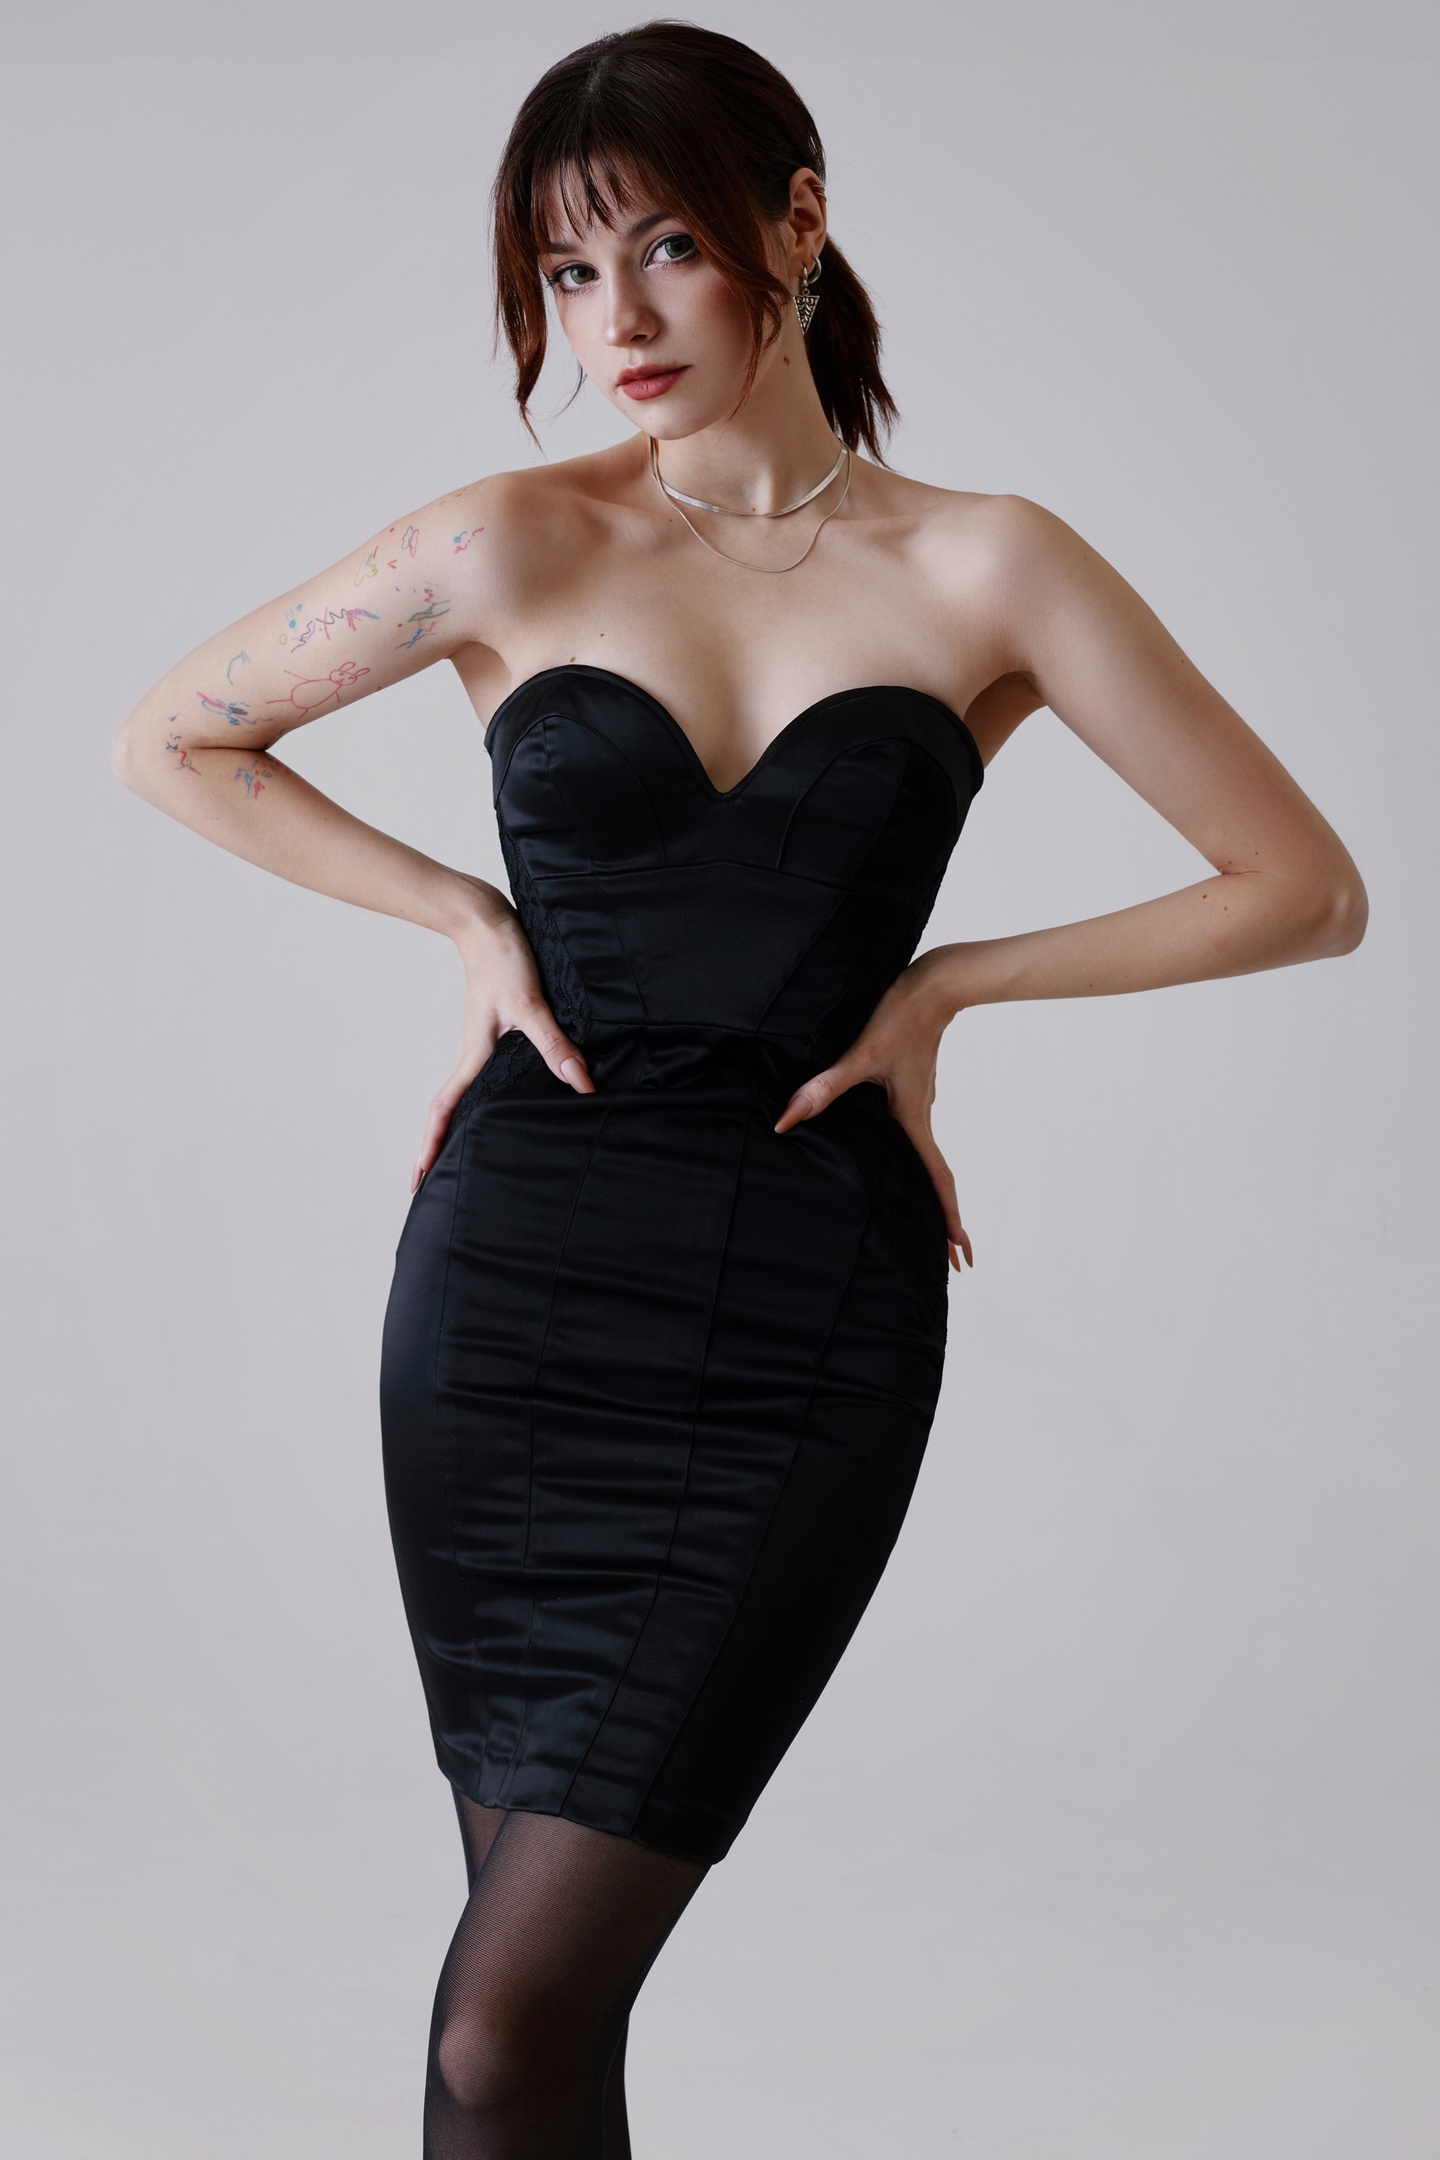 People 1440x2160 Karina Salakhutdinova women dress black clothing simple background makeup